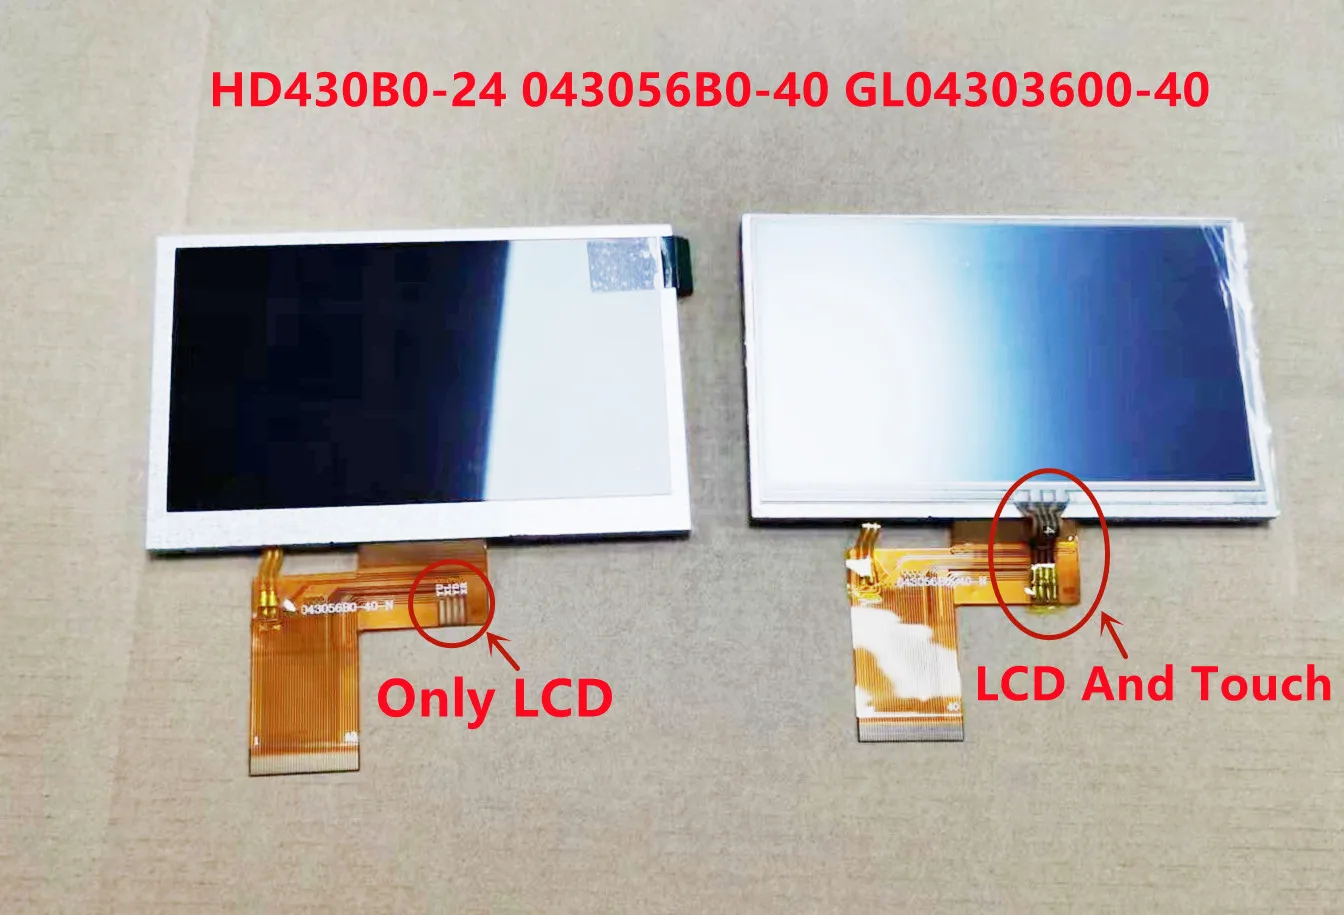 For 4.3 inch 40 Pin TFT LCD Display Common Screen GL043056B0-40 HD430B0-24 043056B0-40 GL04303600-40 ZNL043T702-P40 480(RGB)*272